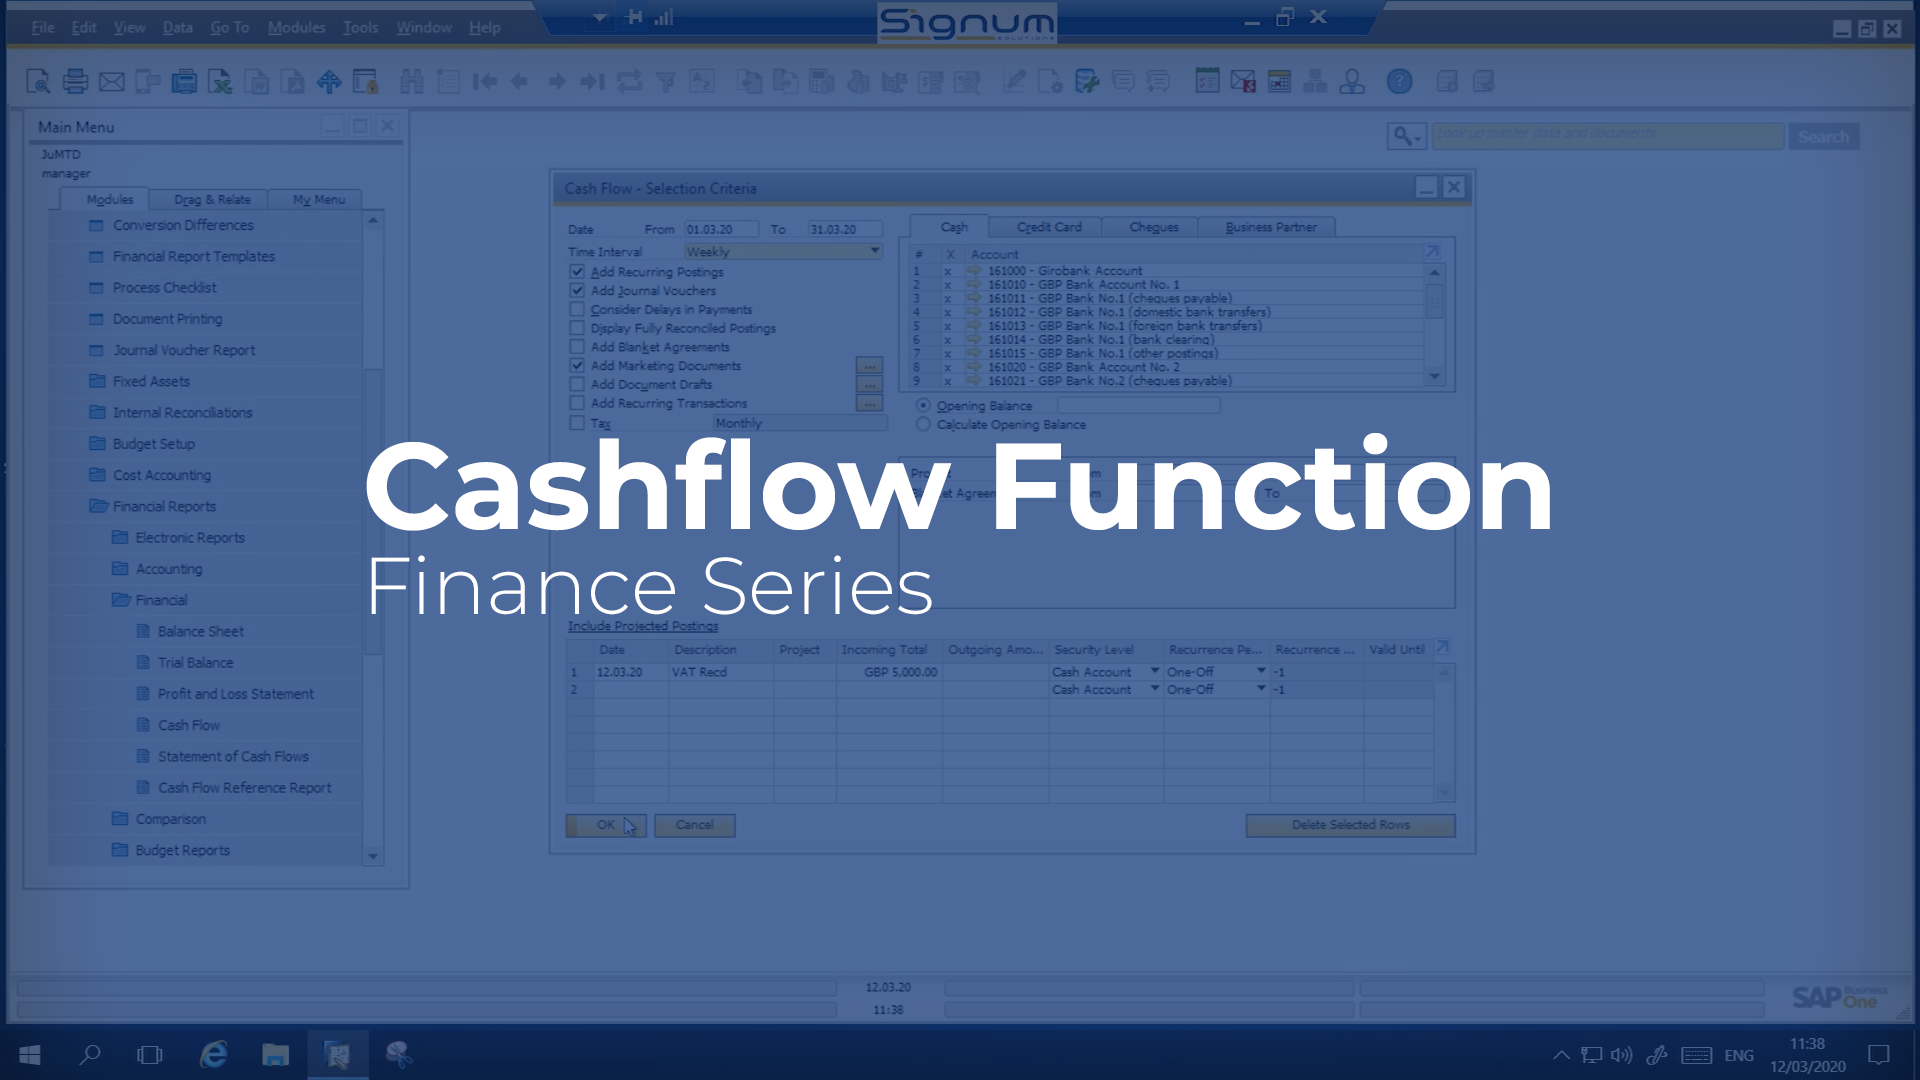 Cashflow Function